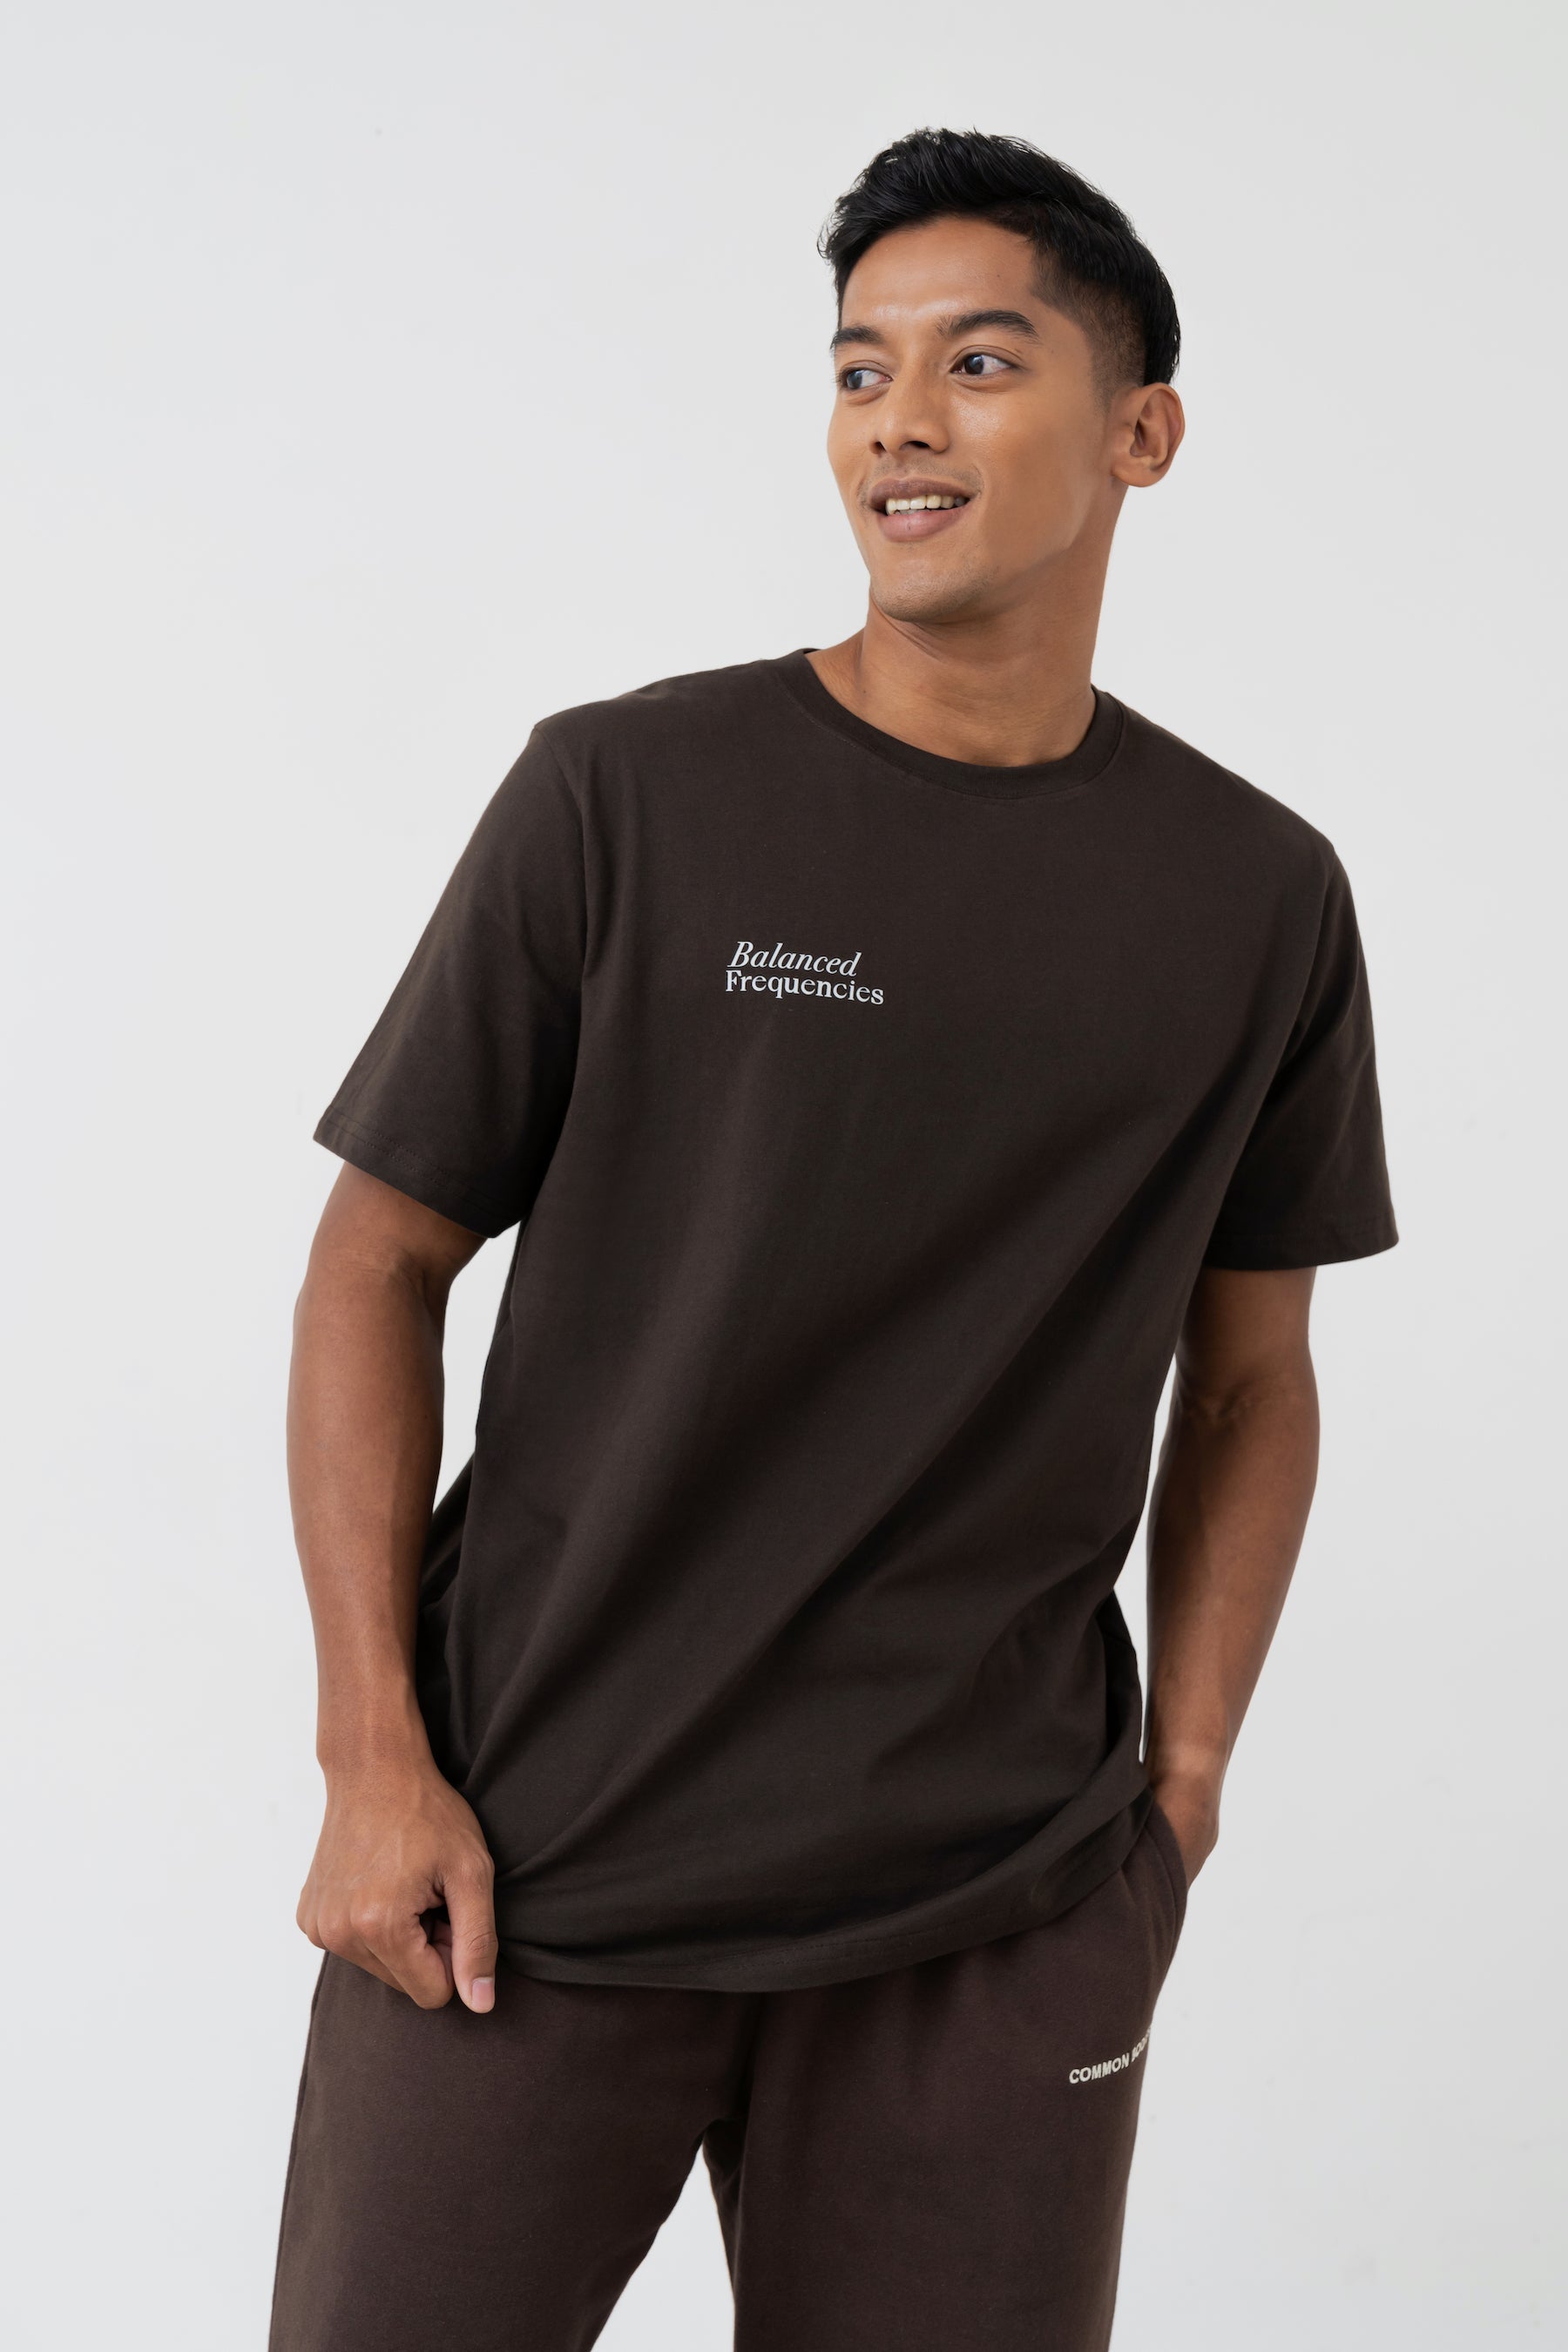 Balanced Frequencies T-shirt in Mocha (Unisex)